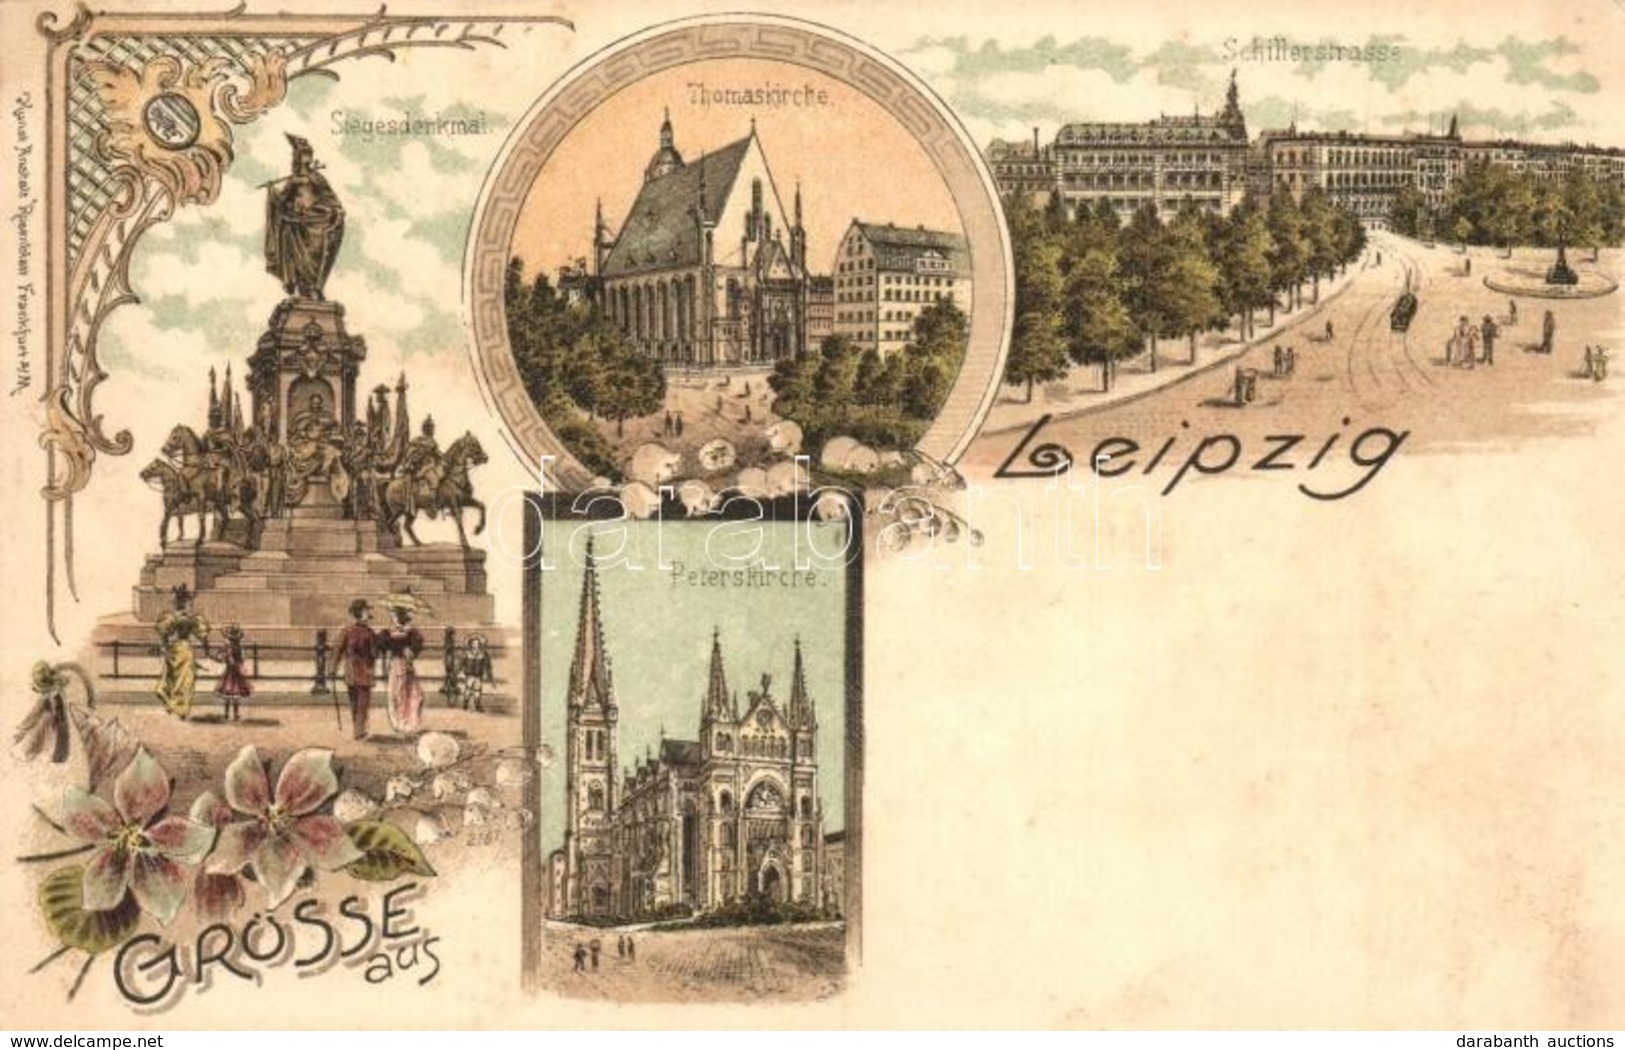 ** T2 Leipzig, Siegesdenkmal, Thomaskirche, Schillerstrasse, Peterskirche / War Monument, Church, Street. Kunstanstalt R - Non Classificati